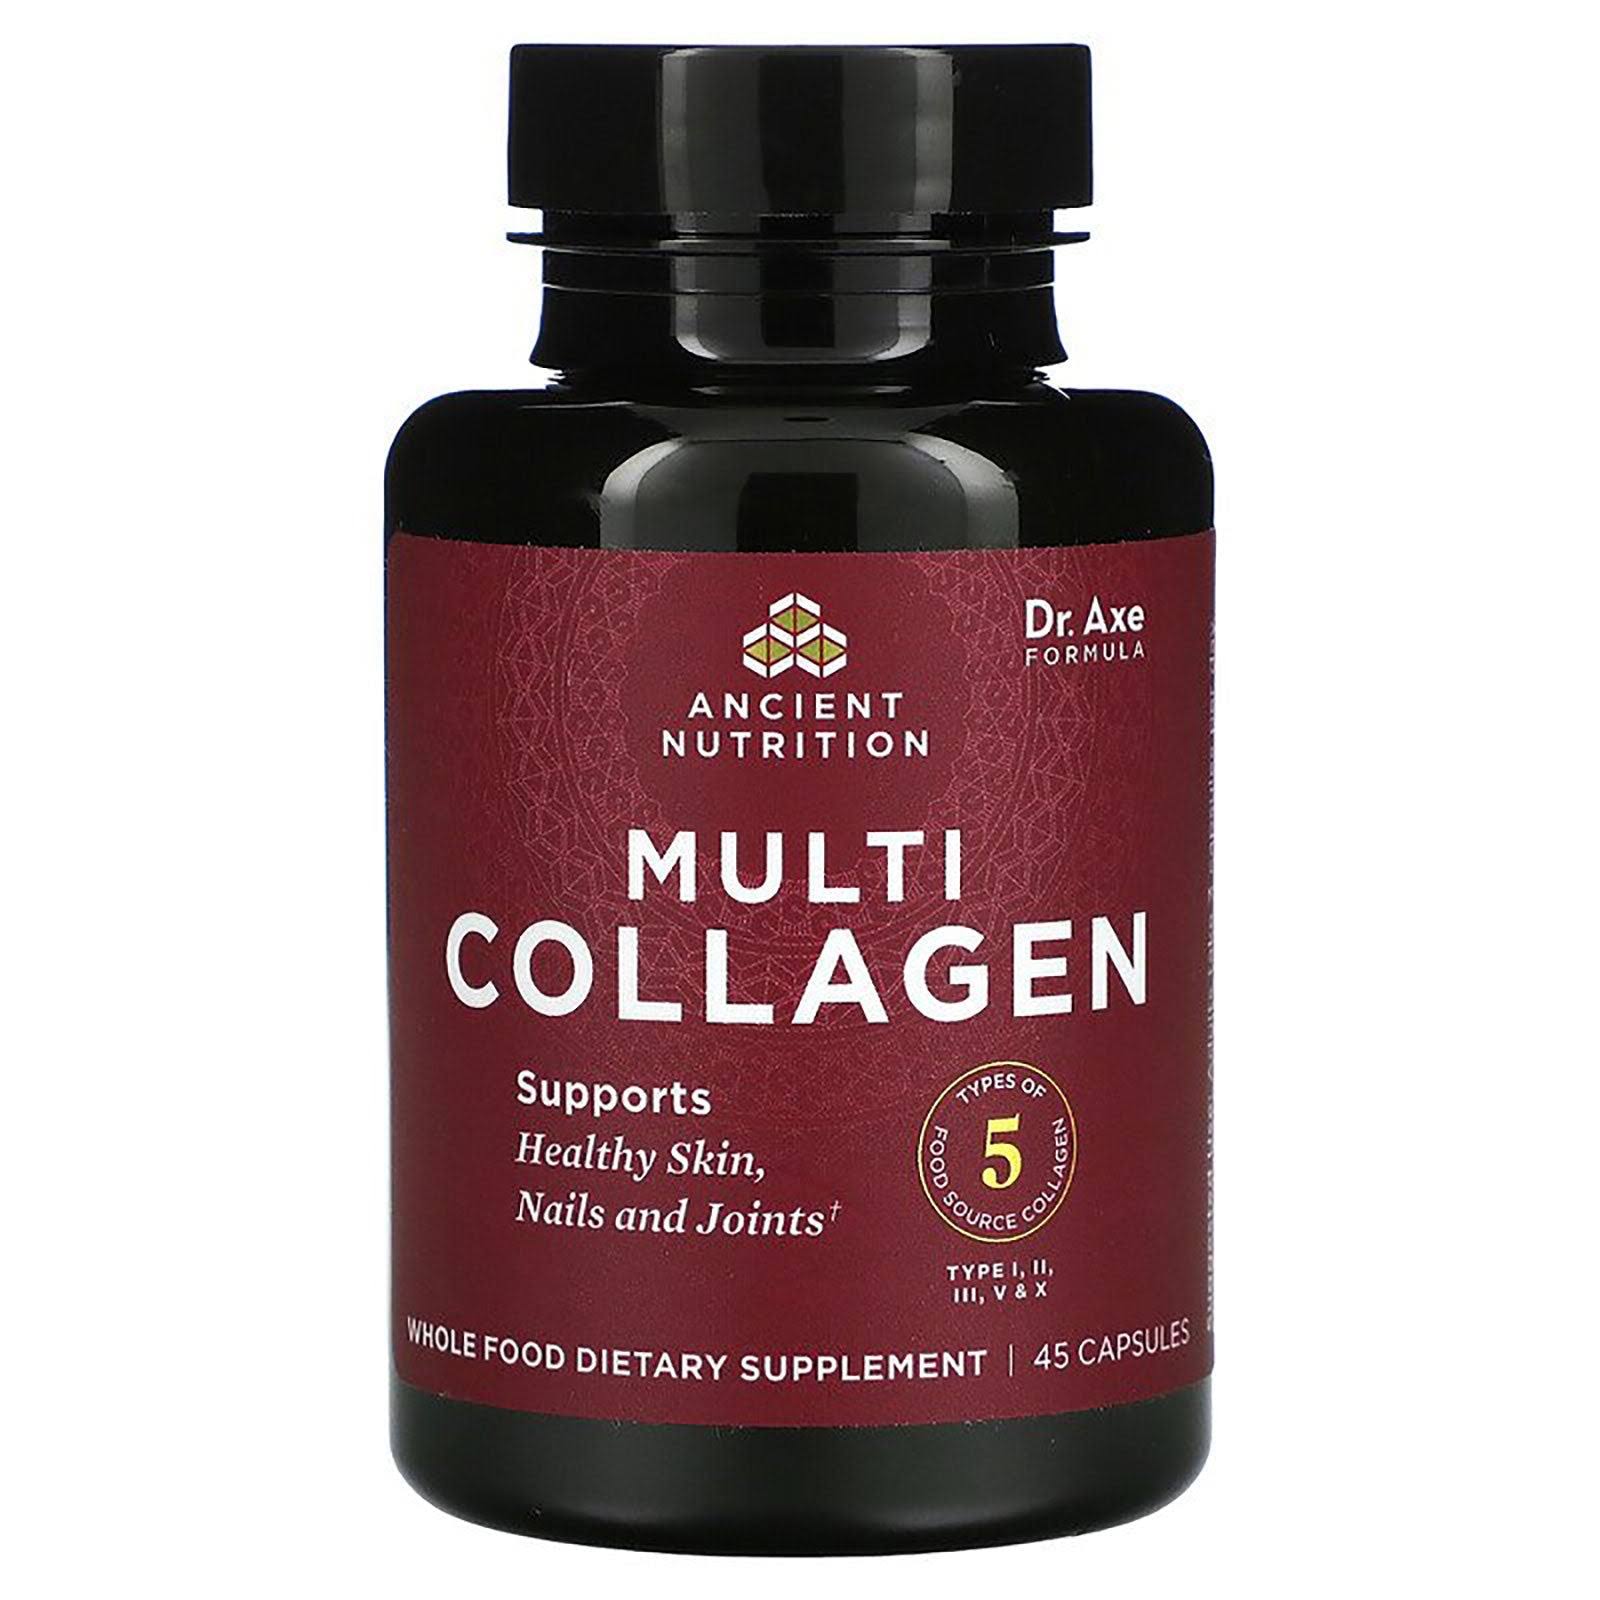 Ancient Nutrition Multi Collagen Protein Dietary Supplement - 45ct